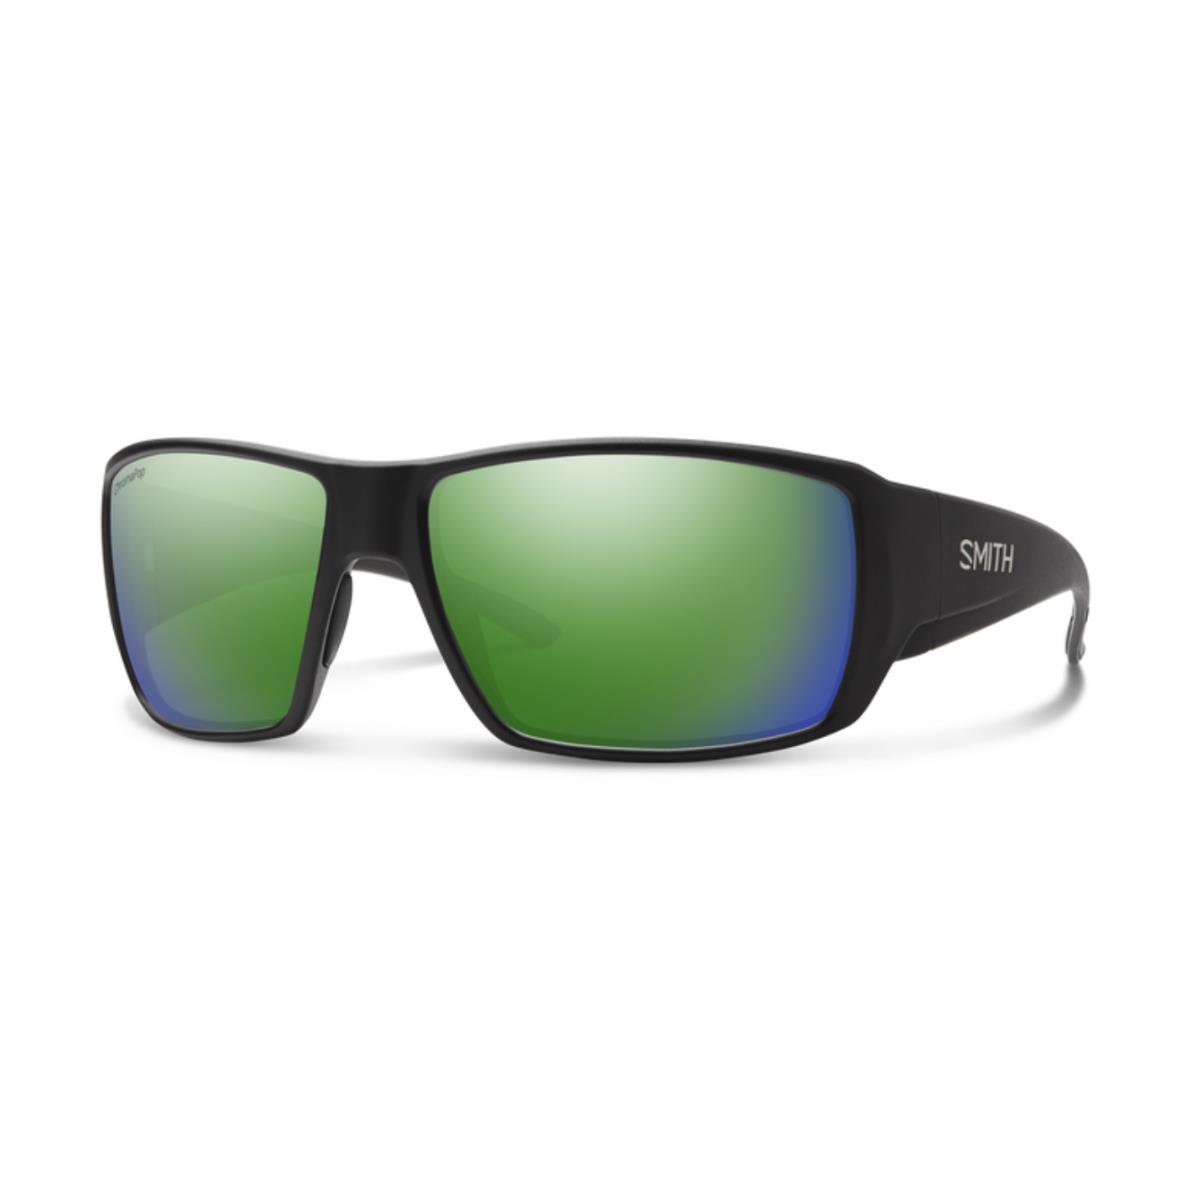 Smith Optics Guides Choice Polarized Sunglasses